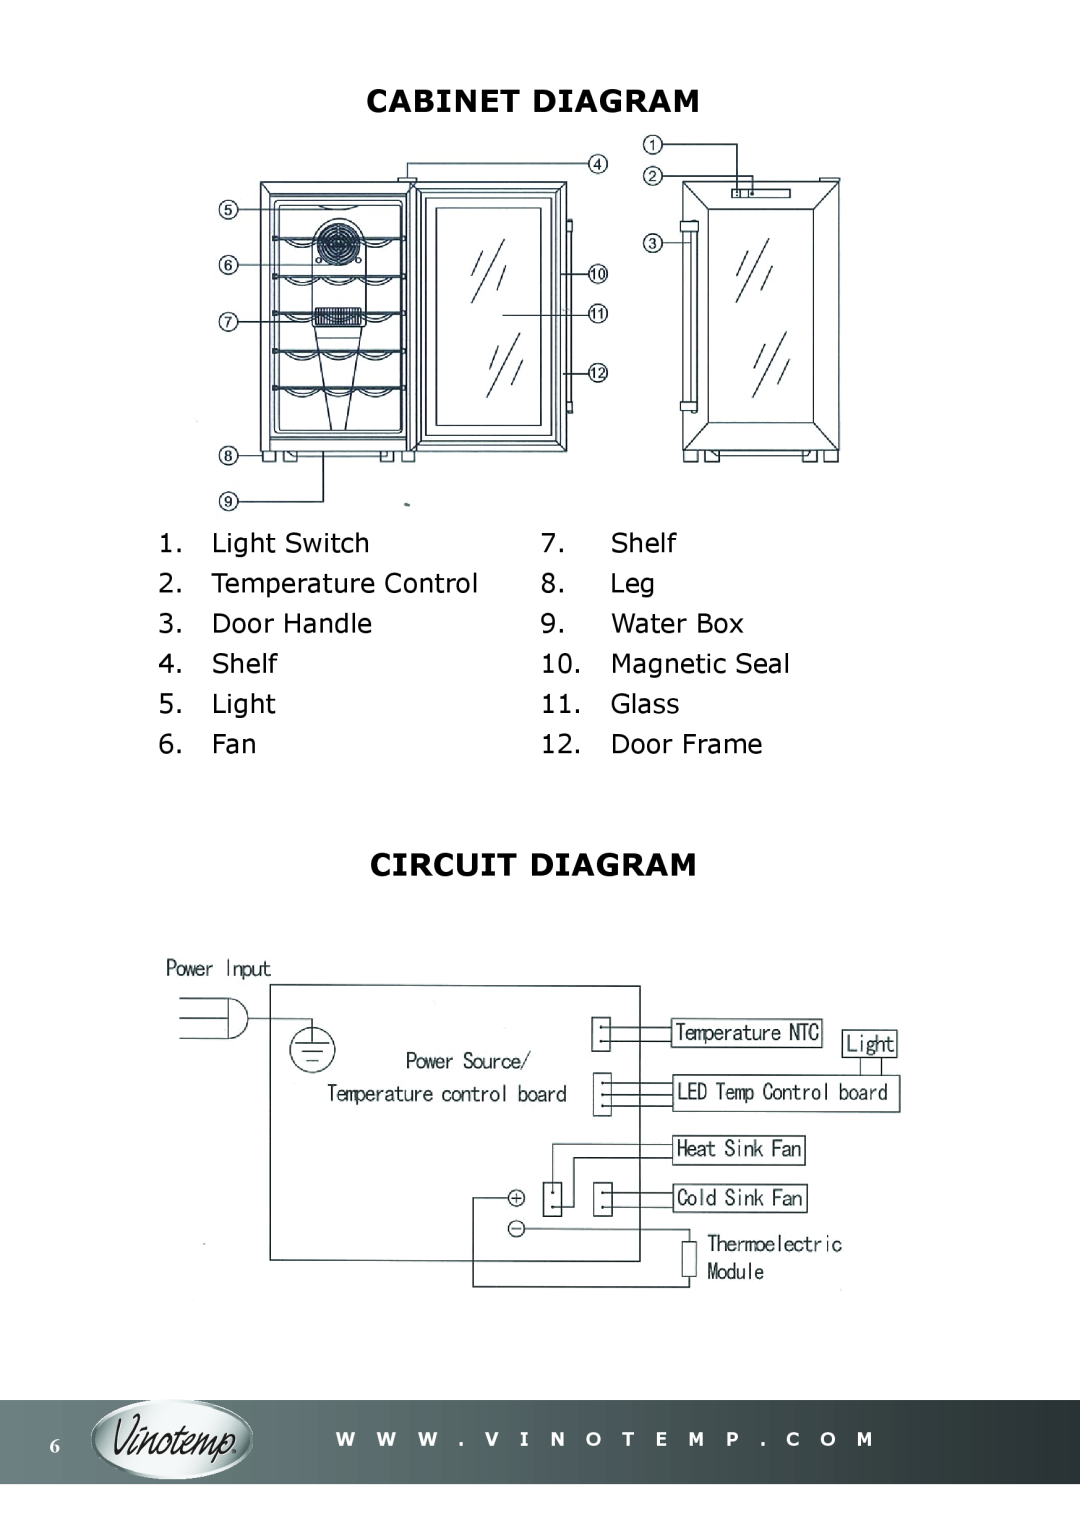 Vinotemp VT-18TEDS owner manual Cabinet Diagram, Circuit Diagram 